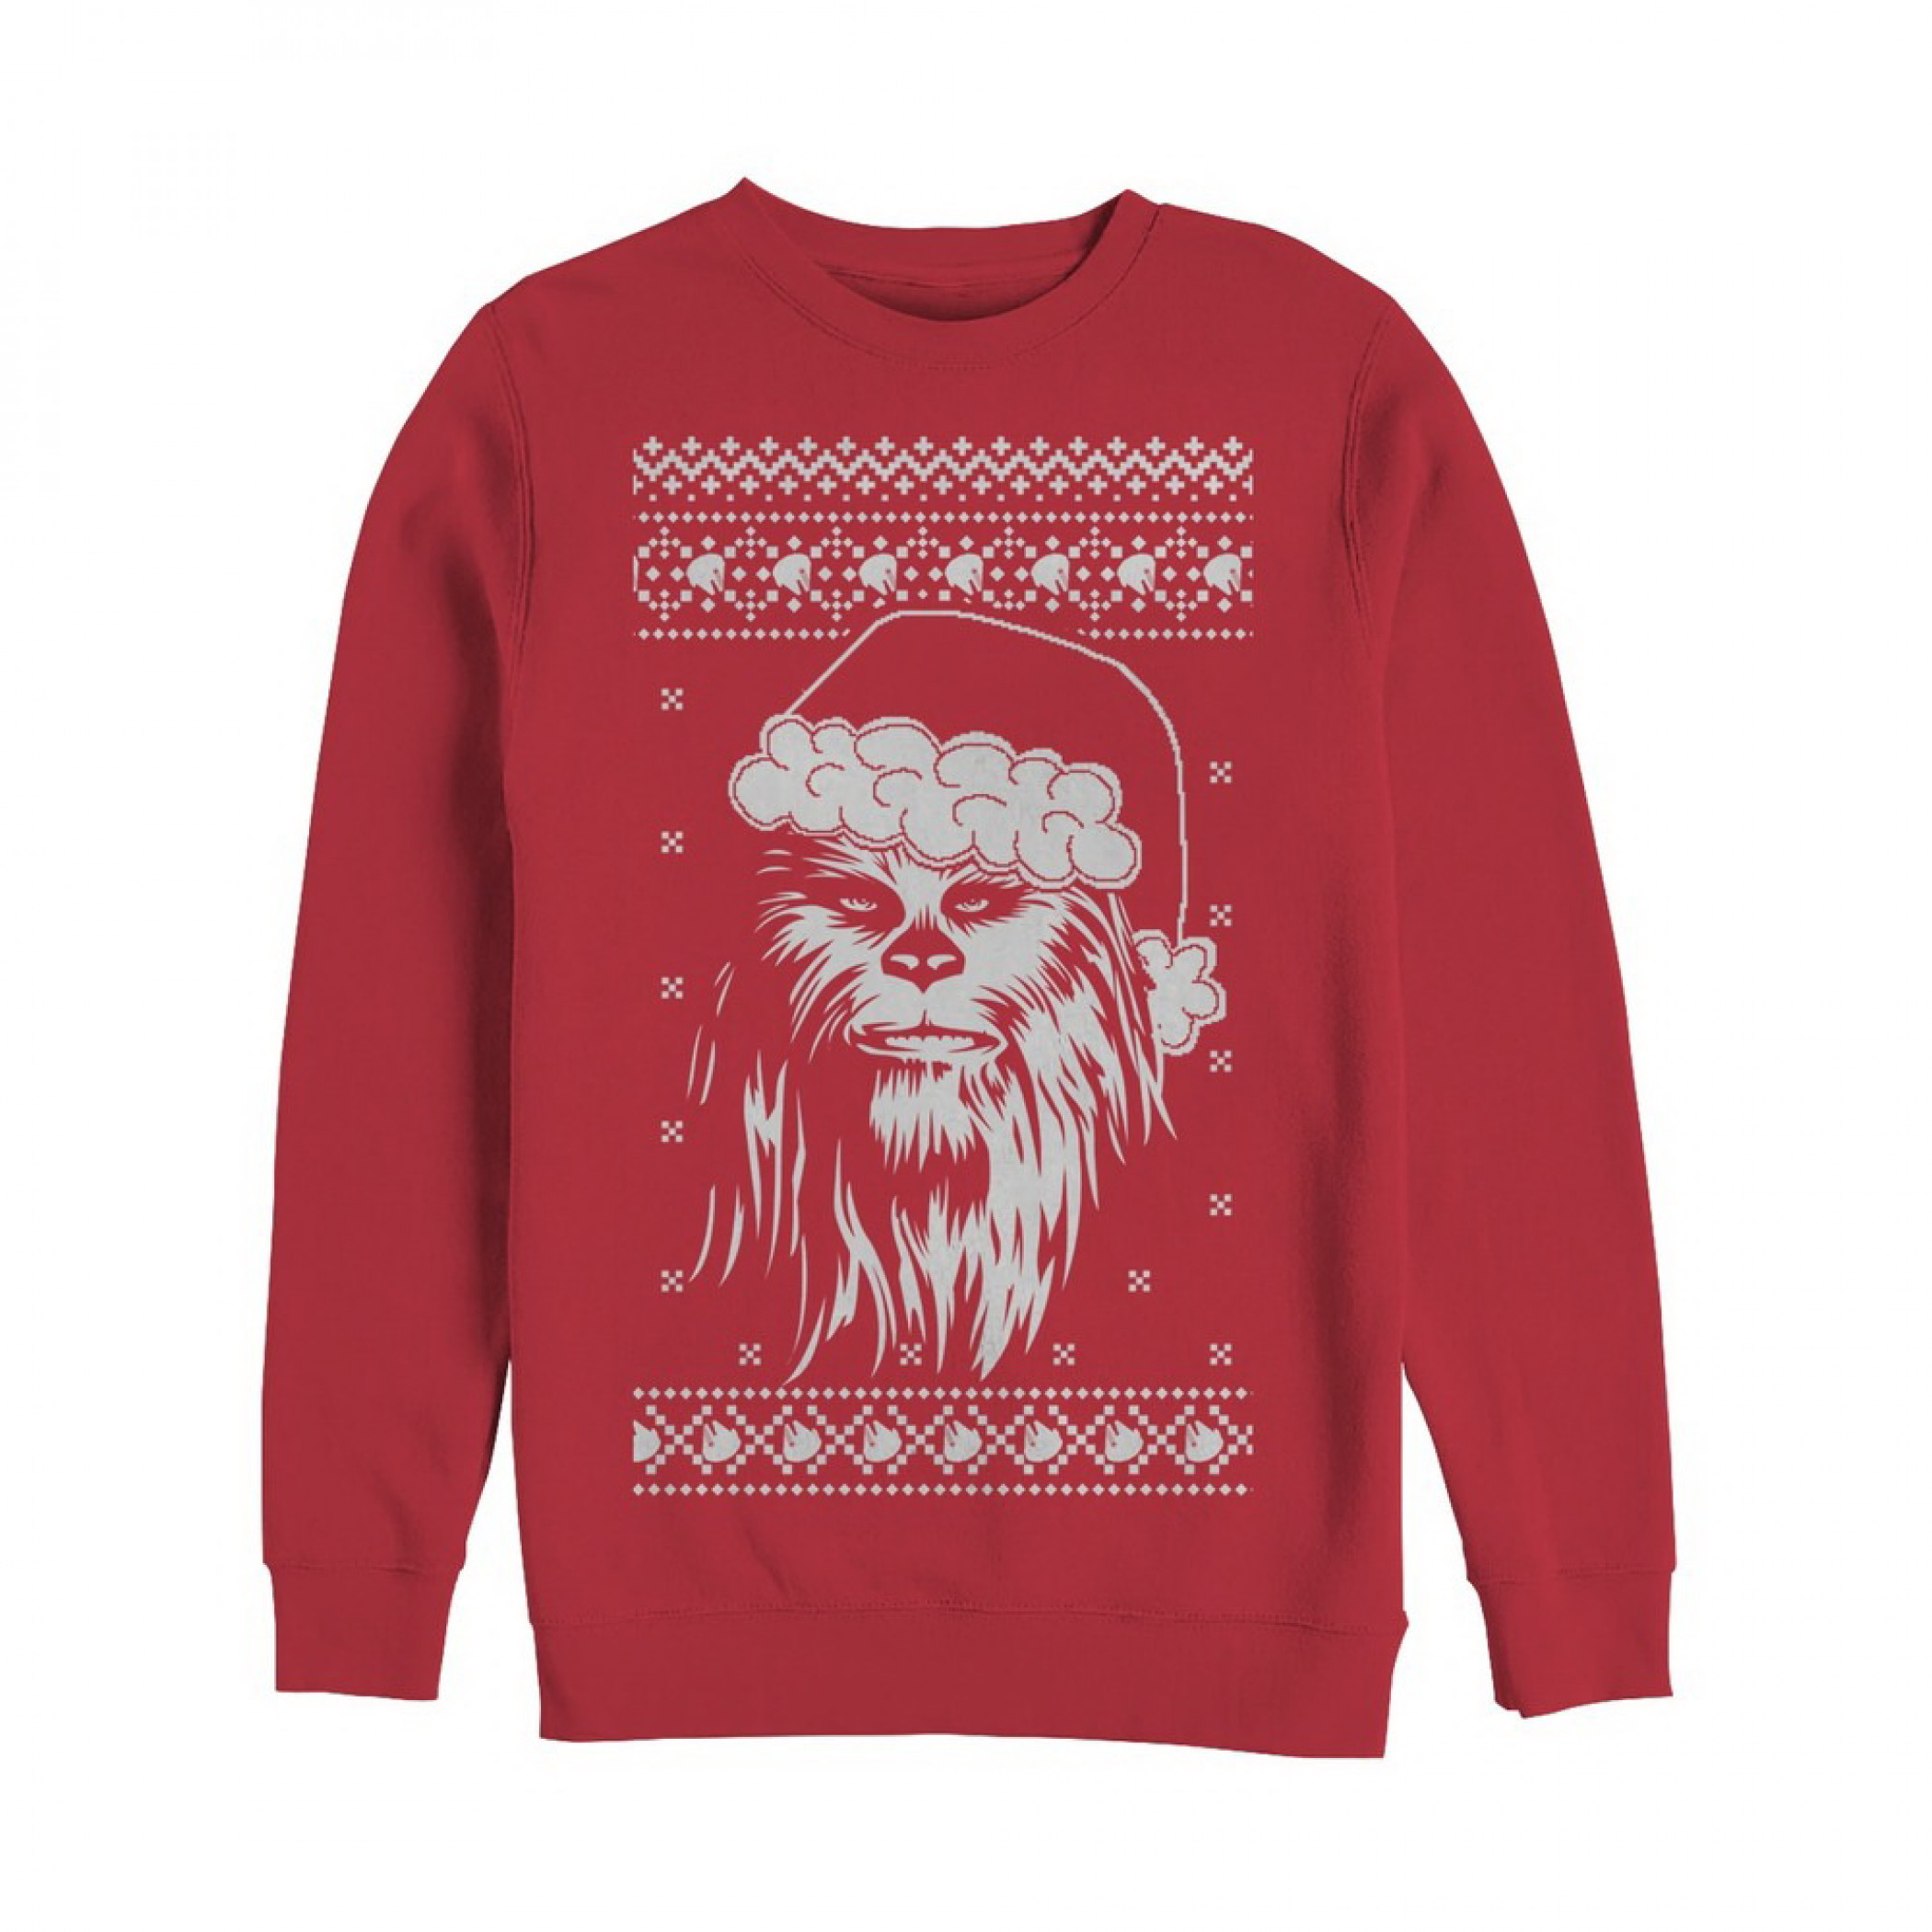 Star Wars Chewbacca Ugly Christmas Sweater Design Sweatshirt